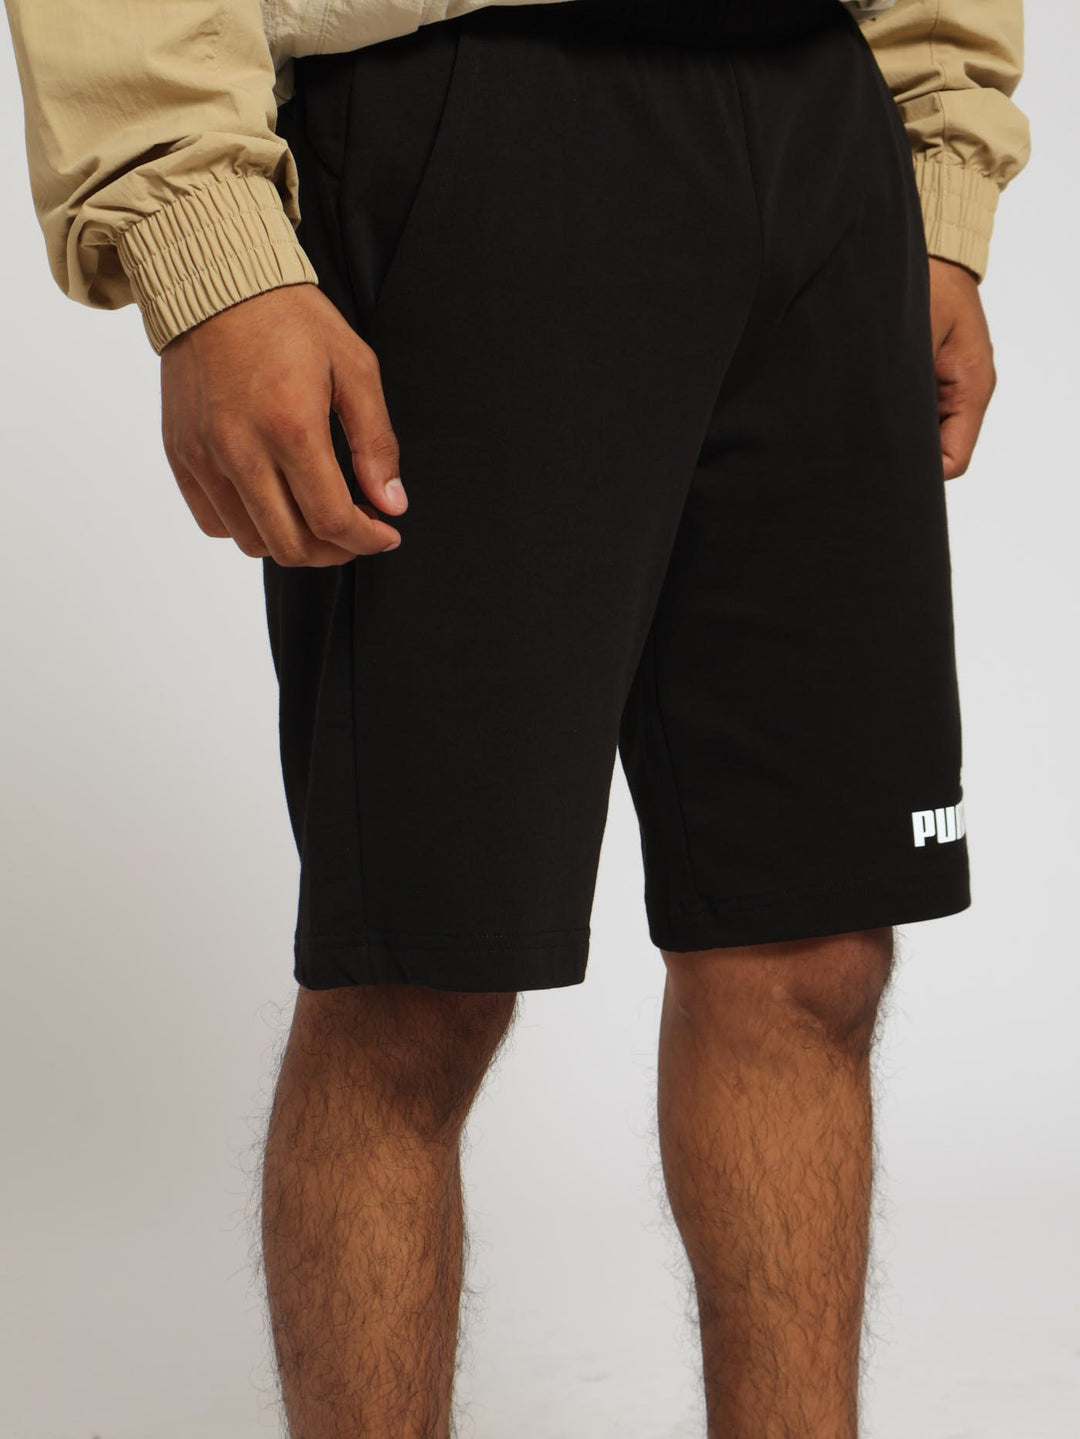 Jersey Shorts - Black